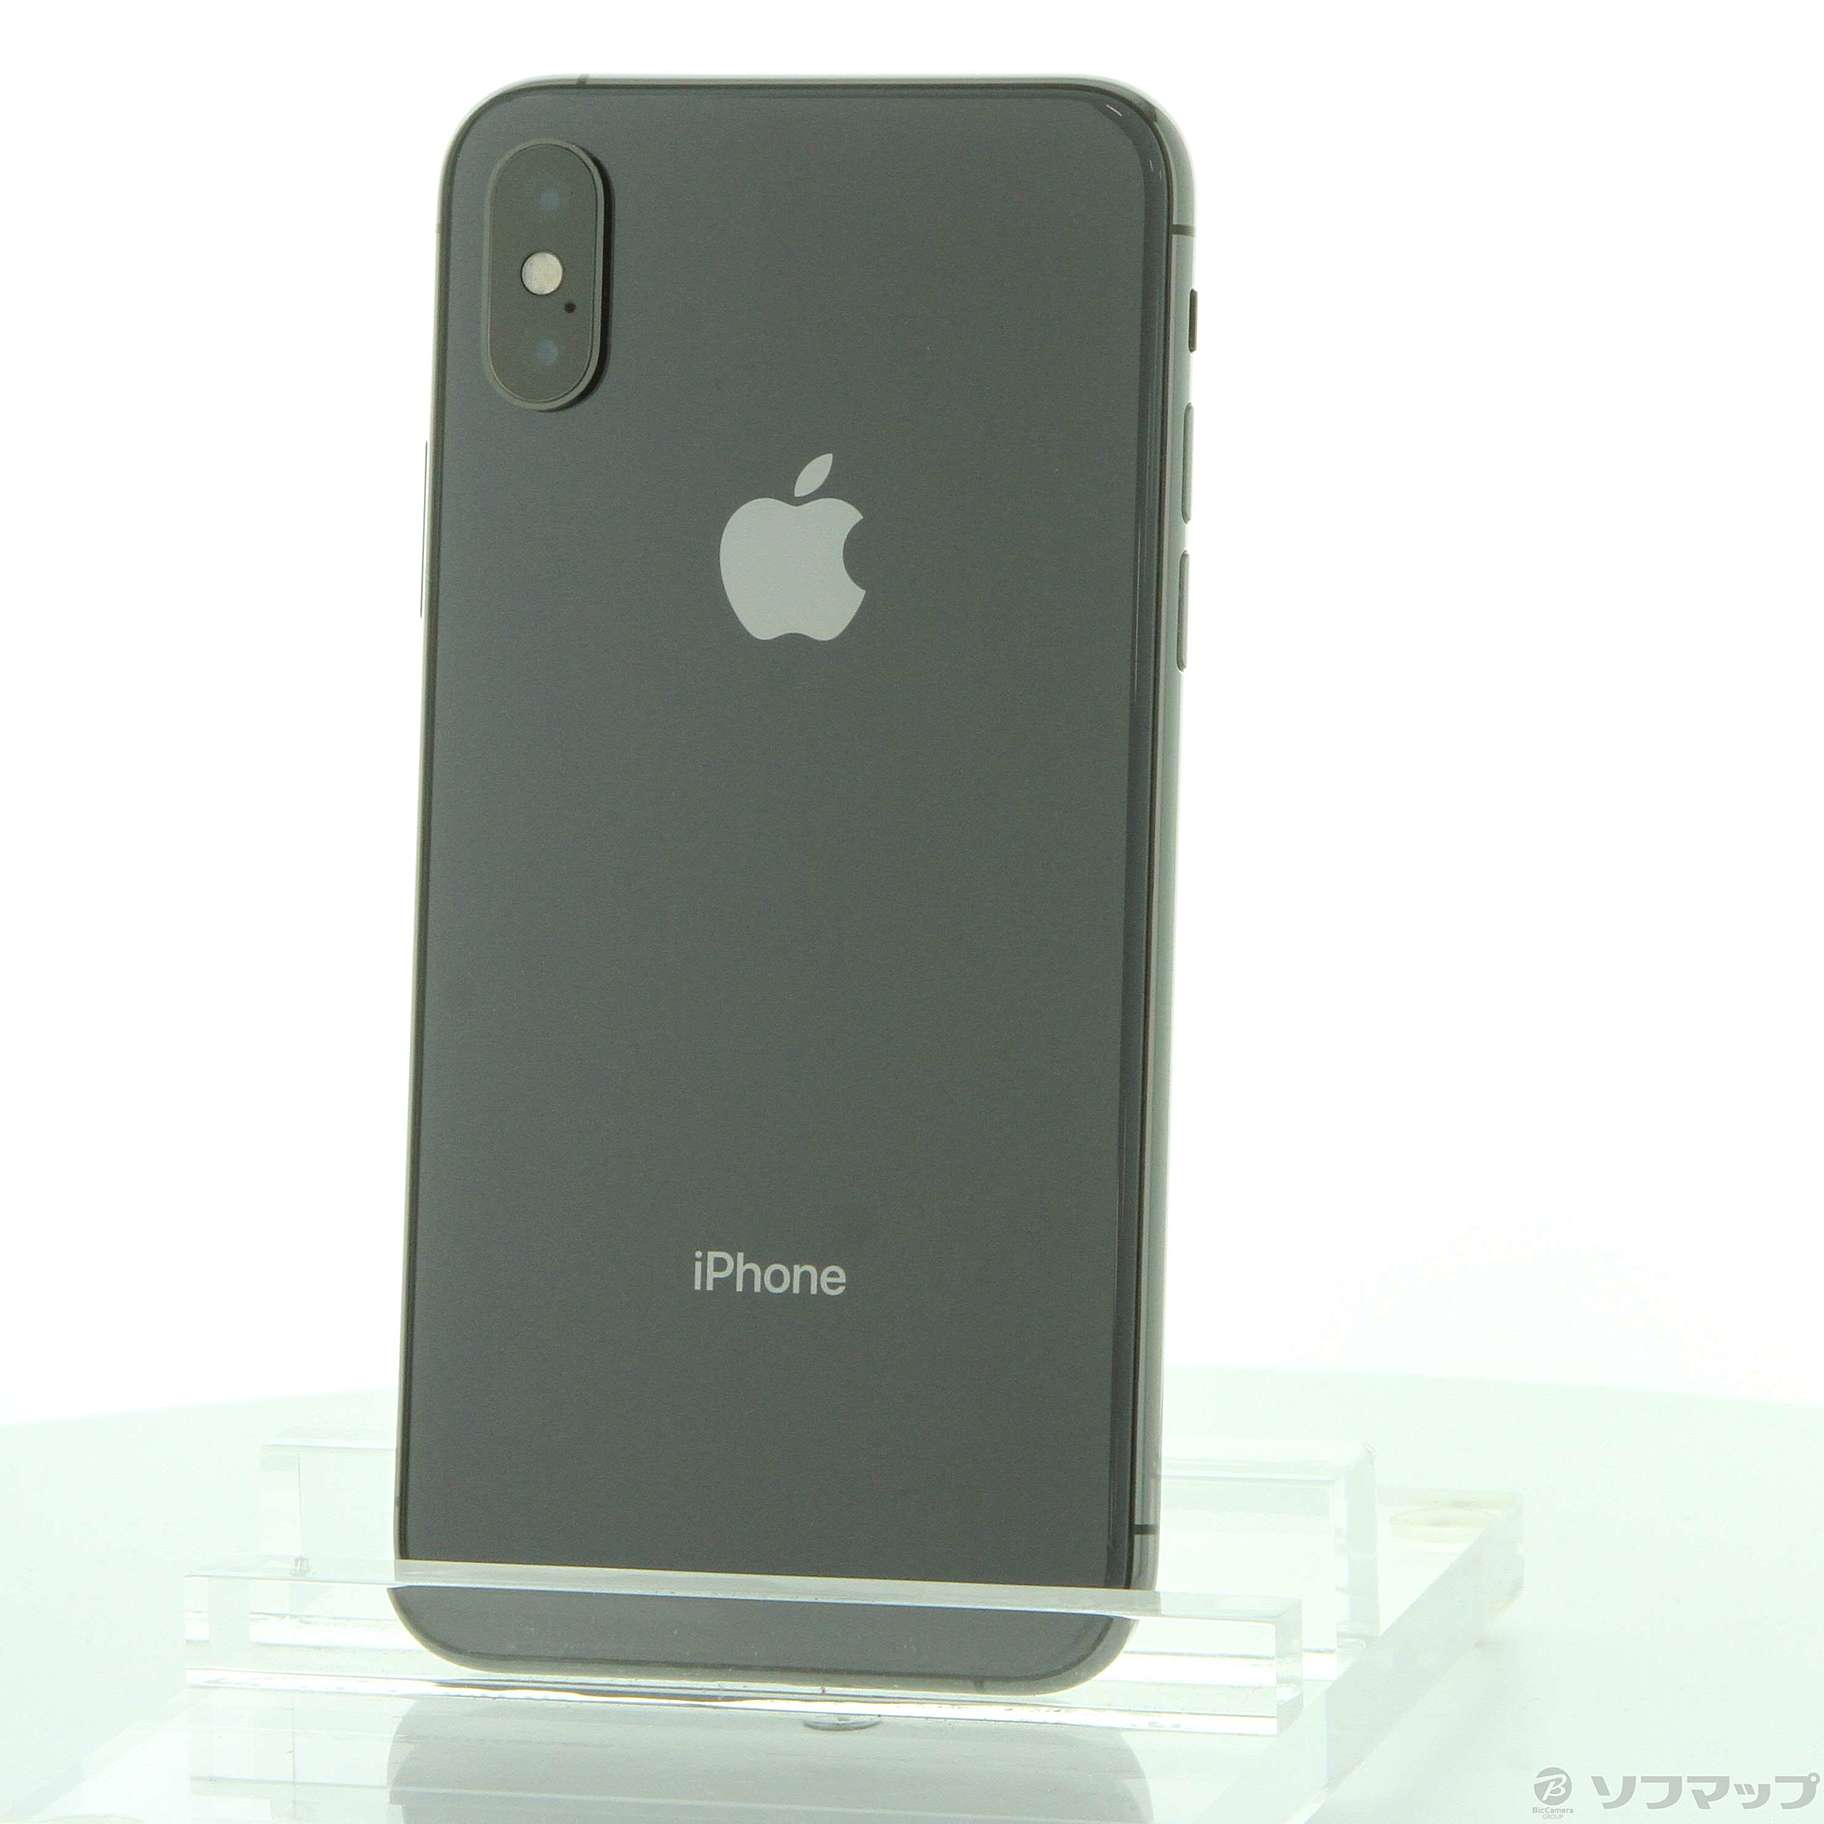 iPhone XS スペースグレイ 256GB SIMフリー - スマートフォン本体